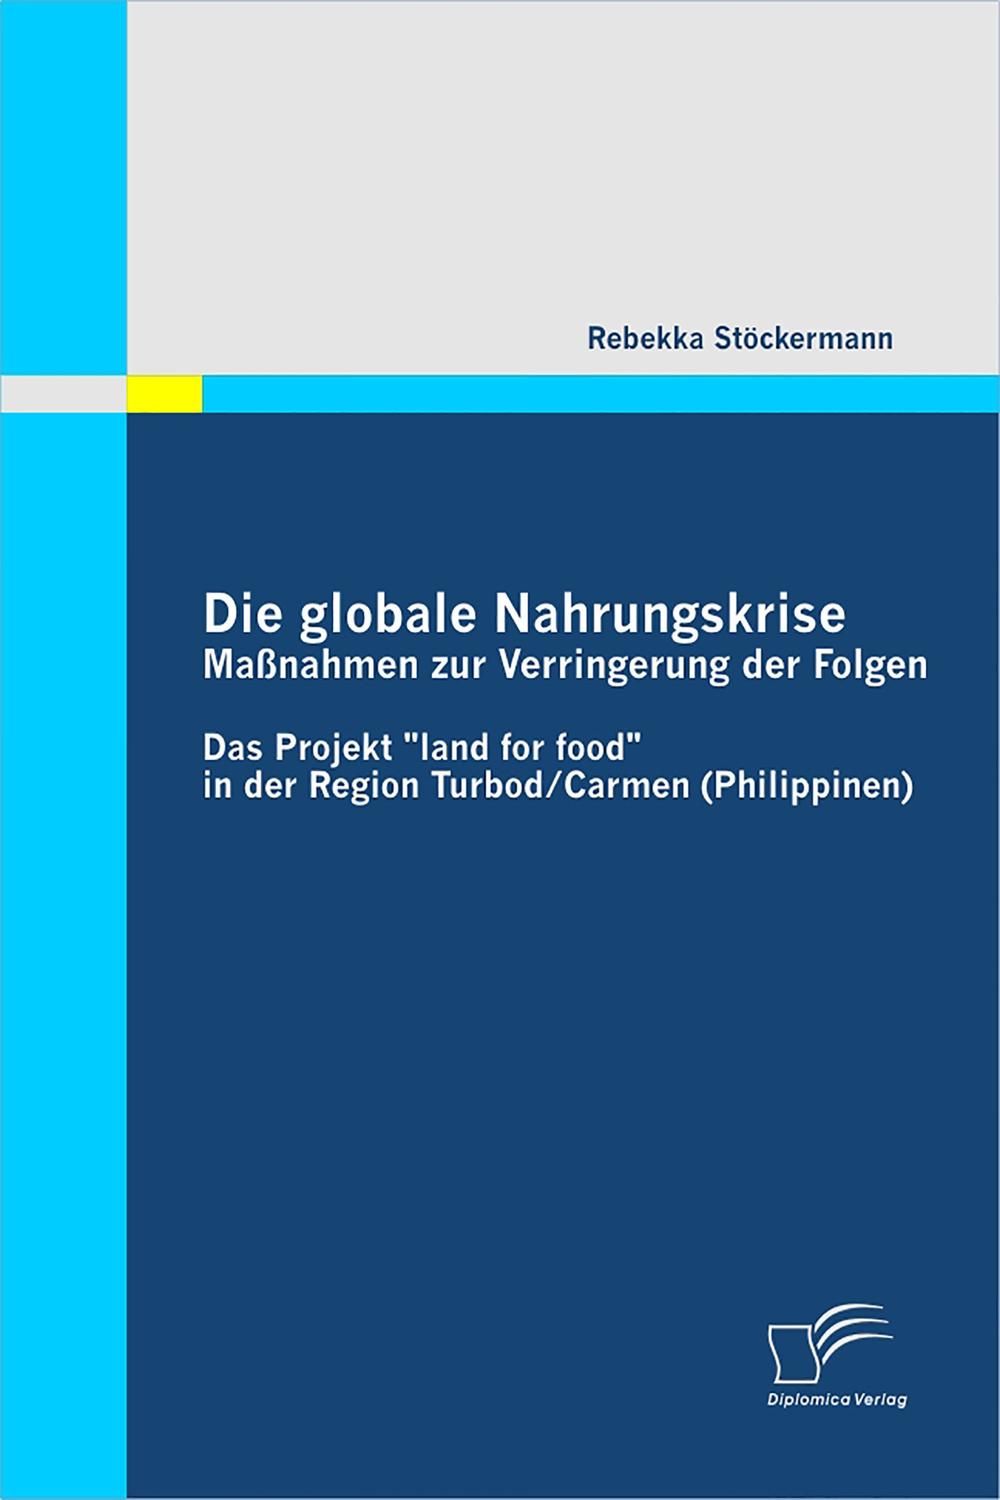 Die globale Nahrungskrise: Maßnahmen zur Verringerung der Folgen - Rebekka Stöckermann